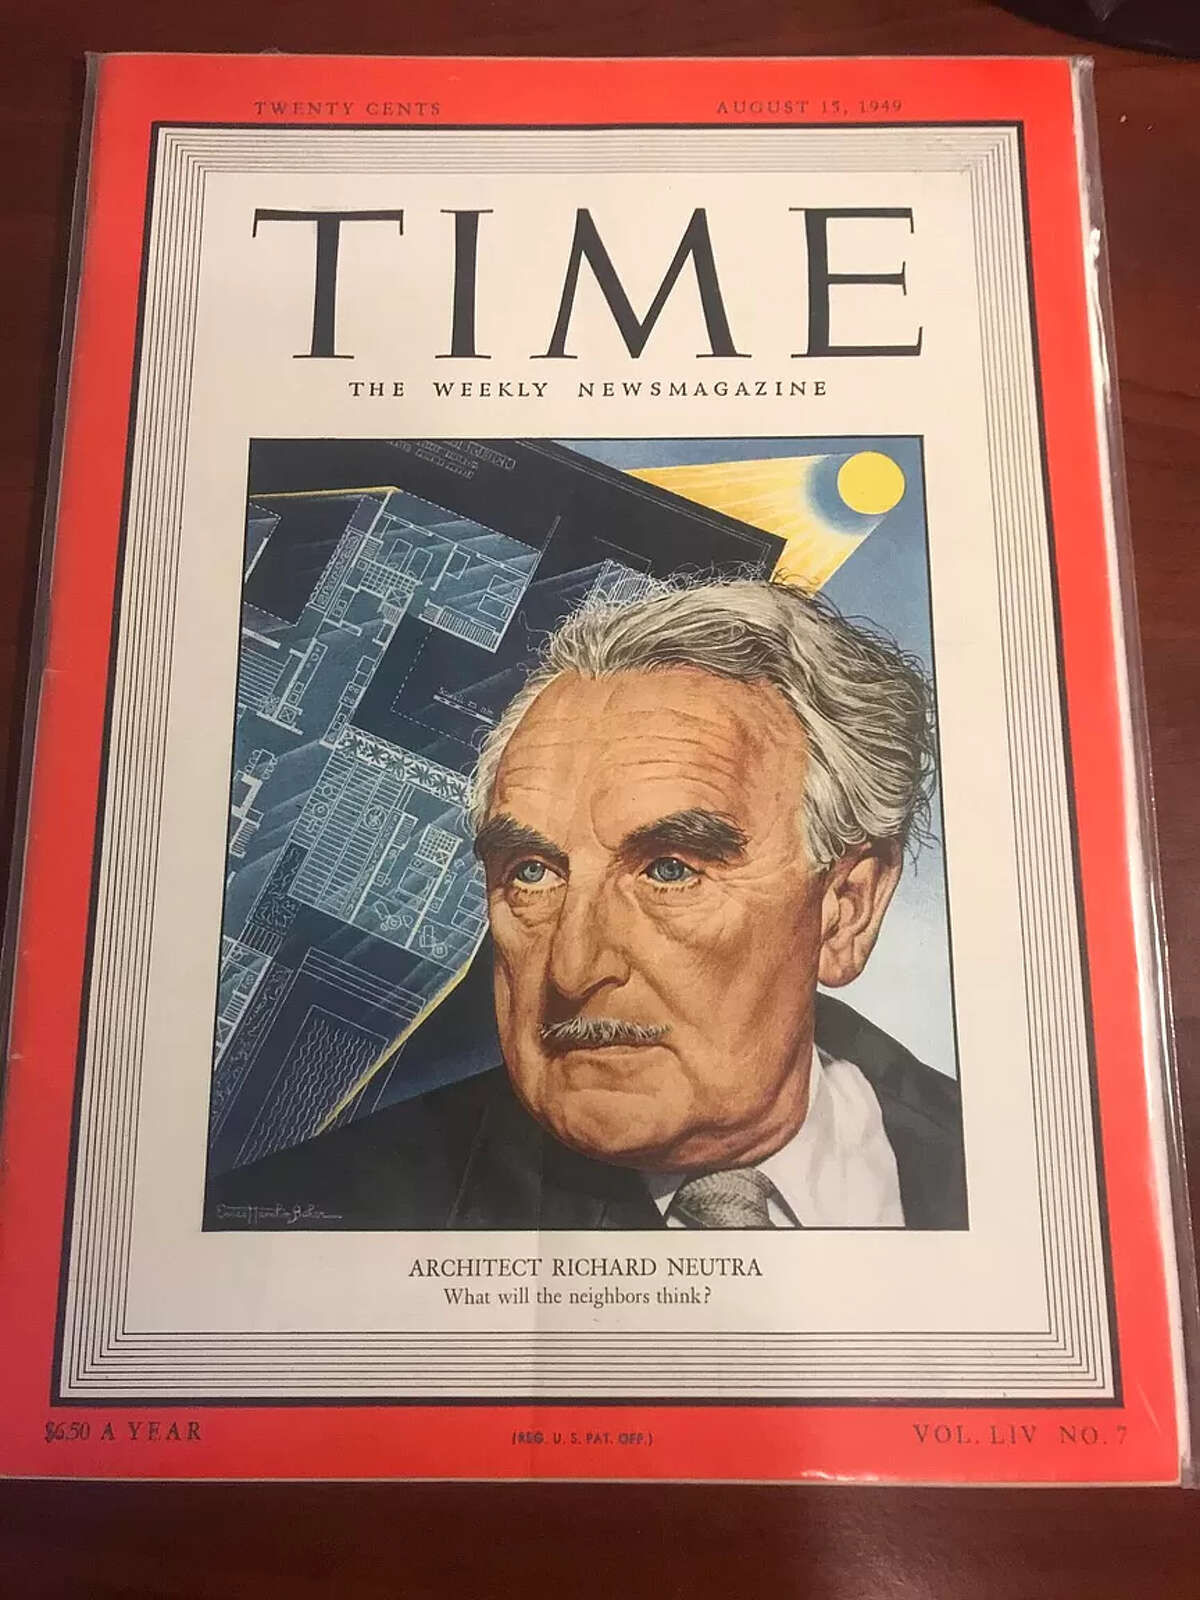 Architect Richard Neutra on the Aug. 15, 1949, cover of Time Magazine